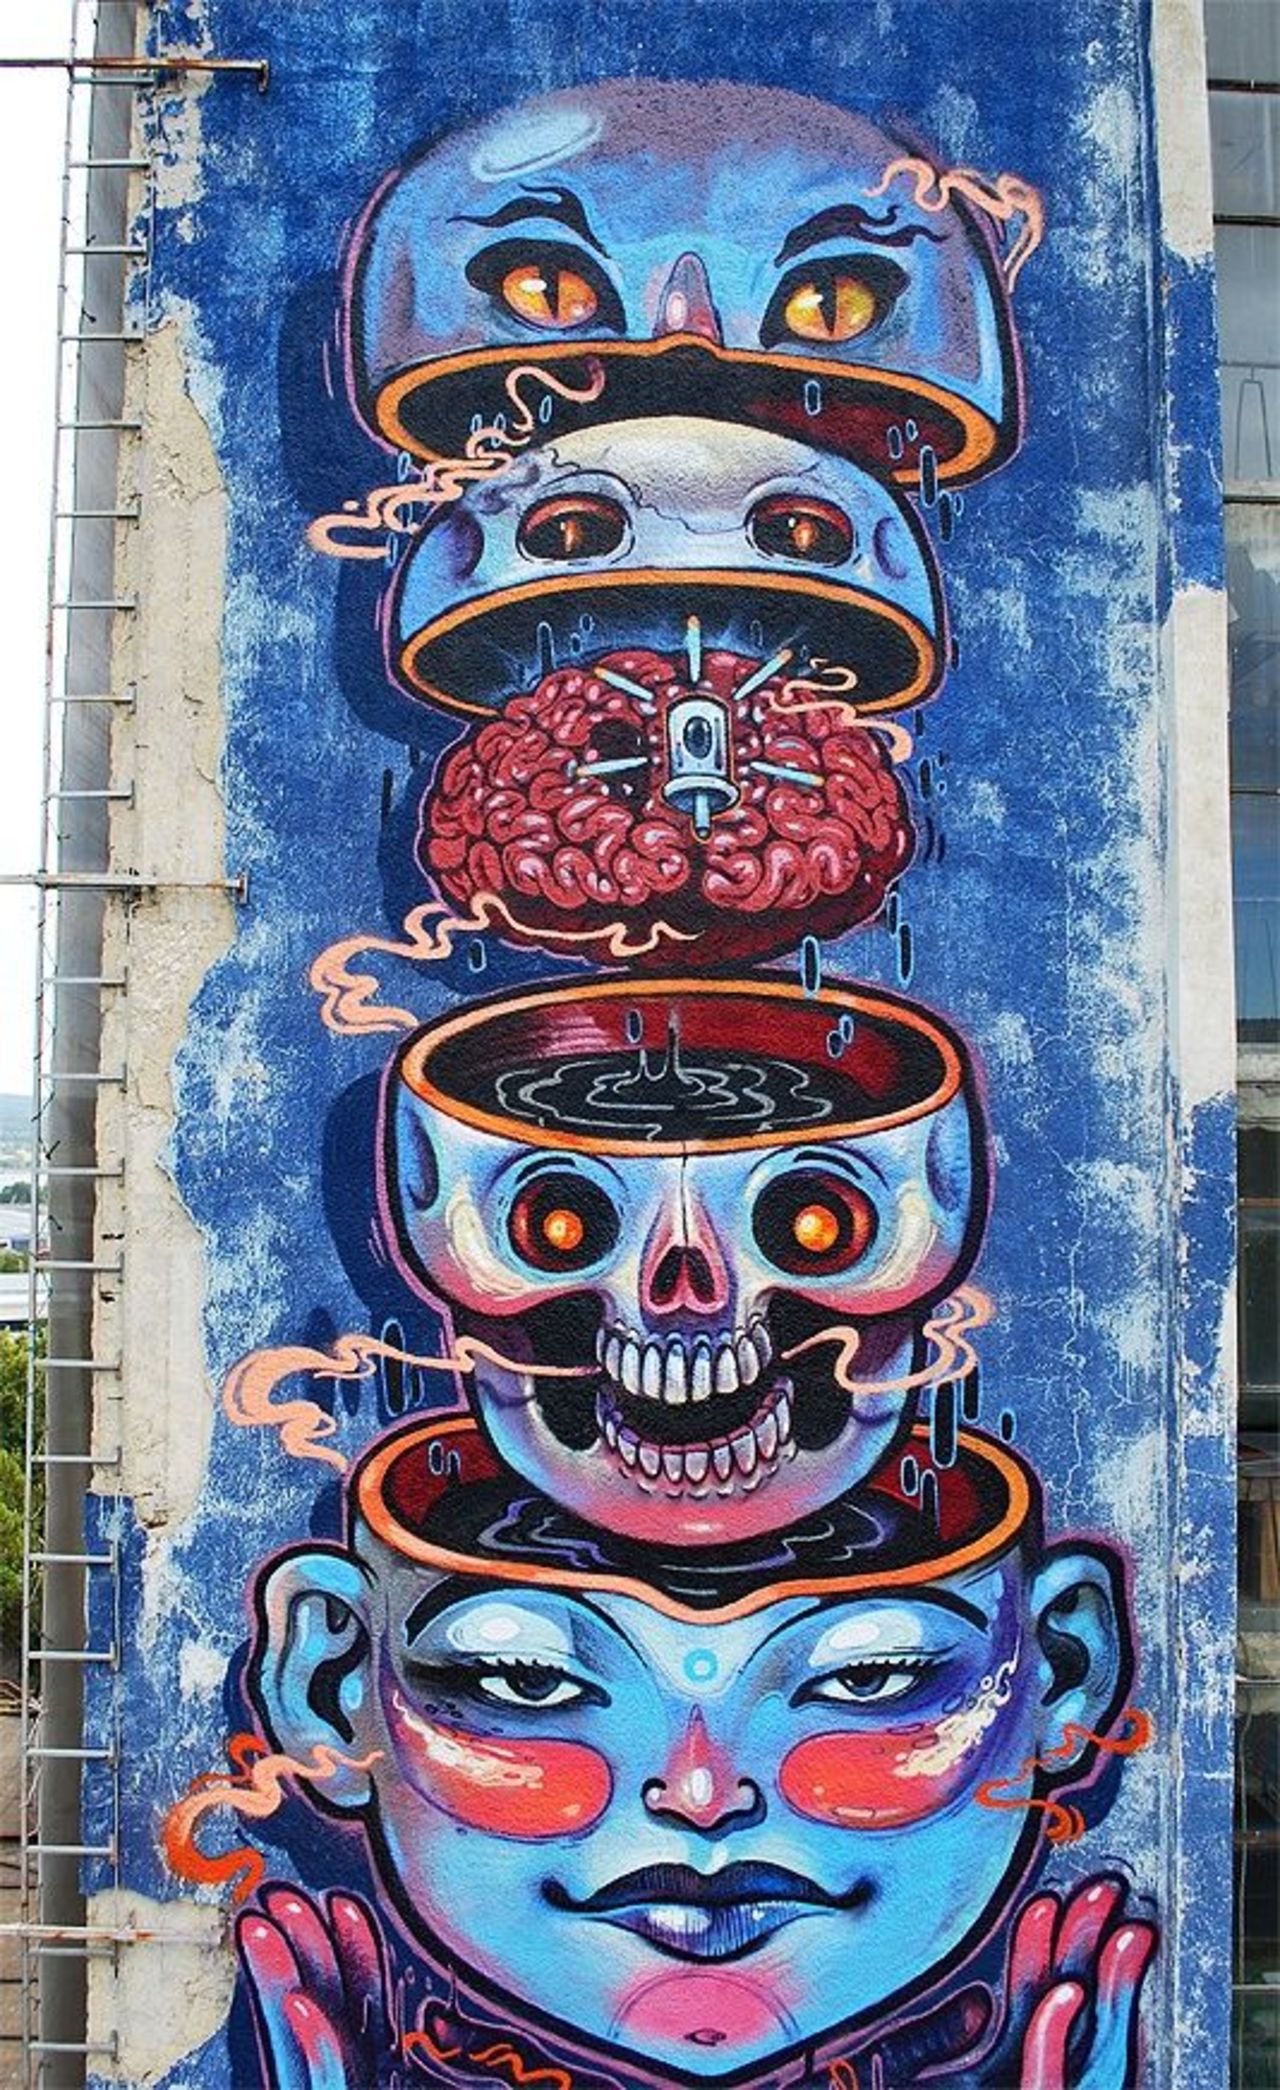 RT @clia_g: #Streetart #urbanart #graffiti #painting #mural “Girls and cats” by #artist Nasimo http://t.co/z2nTY7ILfK